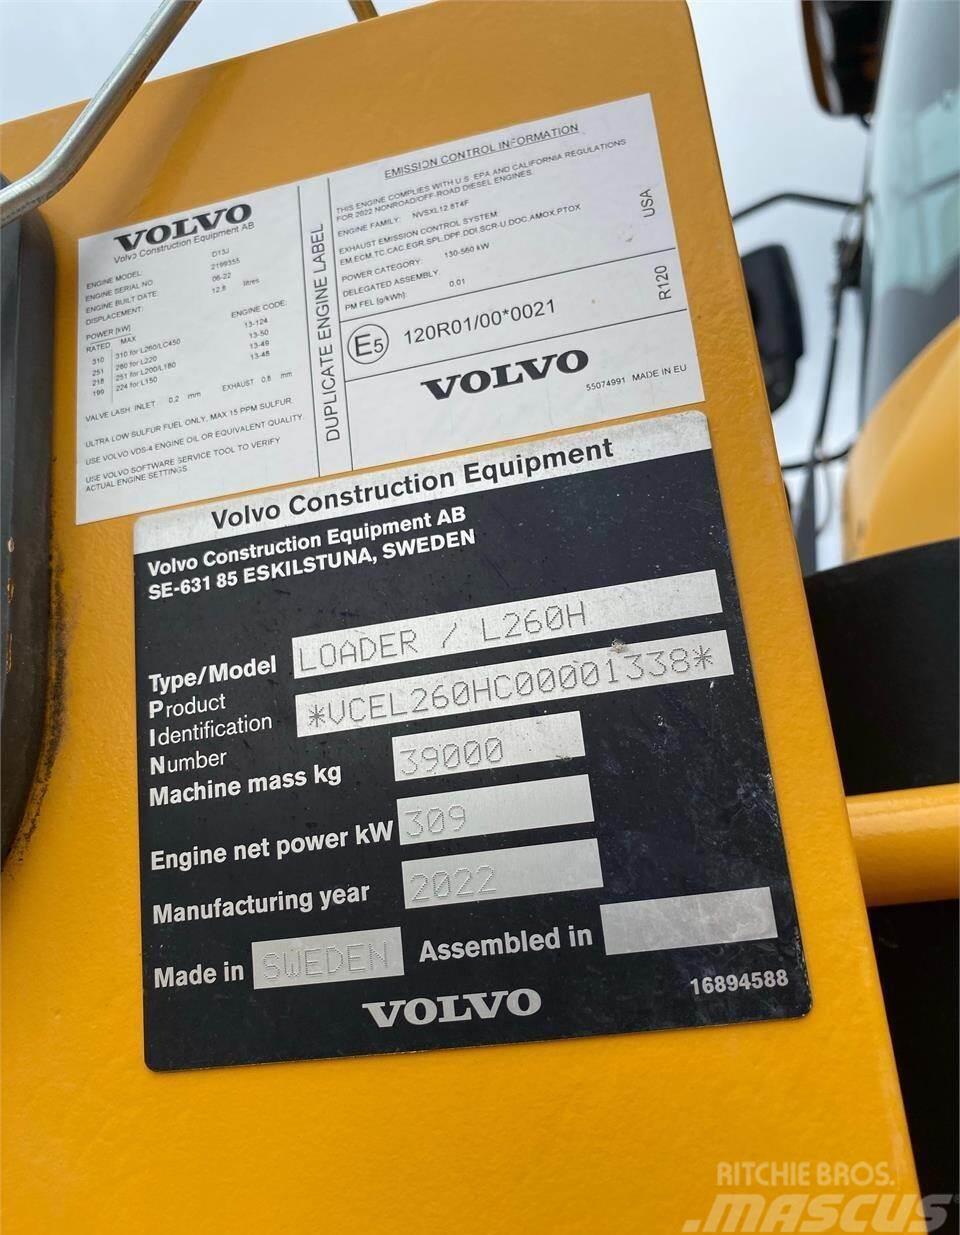 Volvo L260H Gumikerekes homlokrakodók